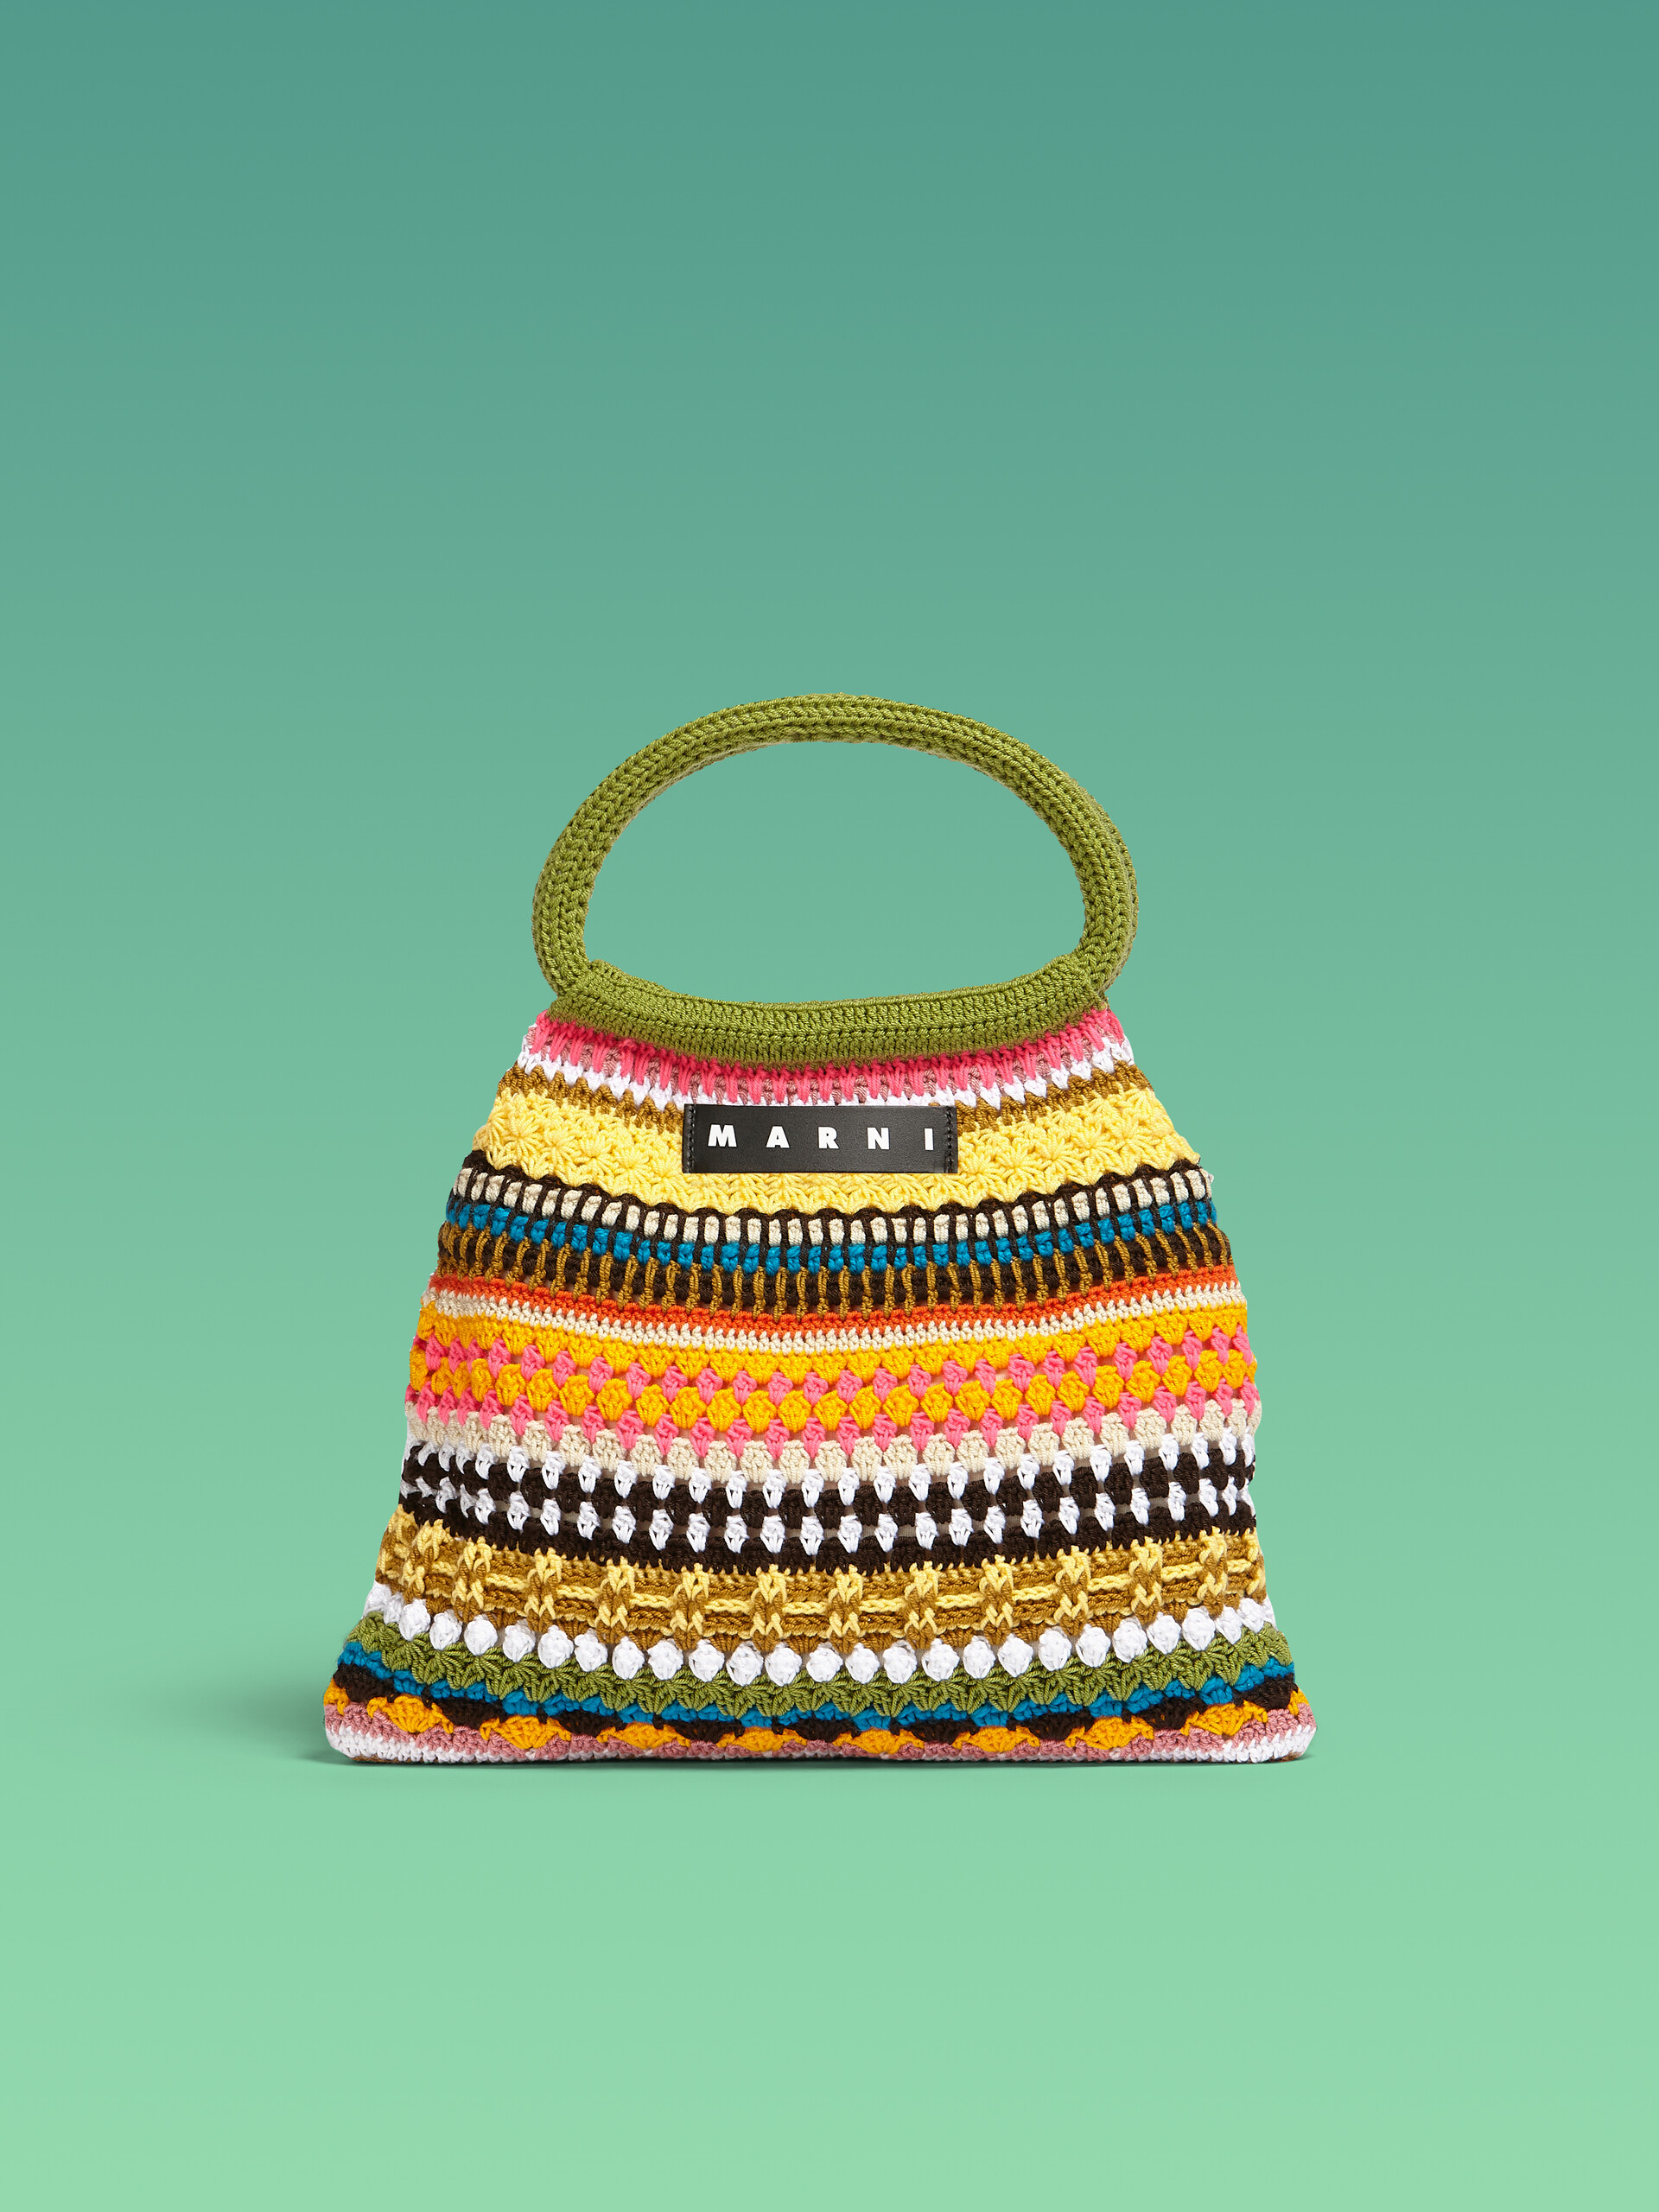 MARNI MARKET GRANNY bag in green crochet - Furniture - Image 1